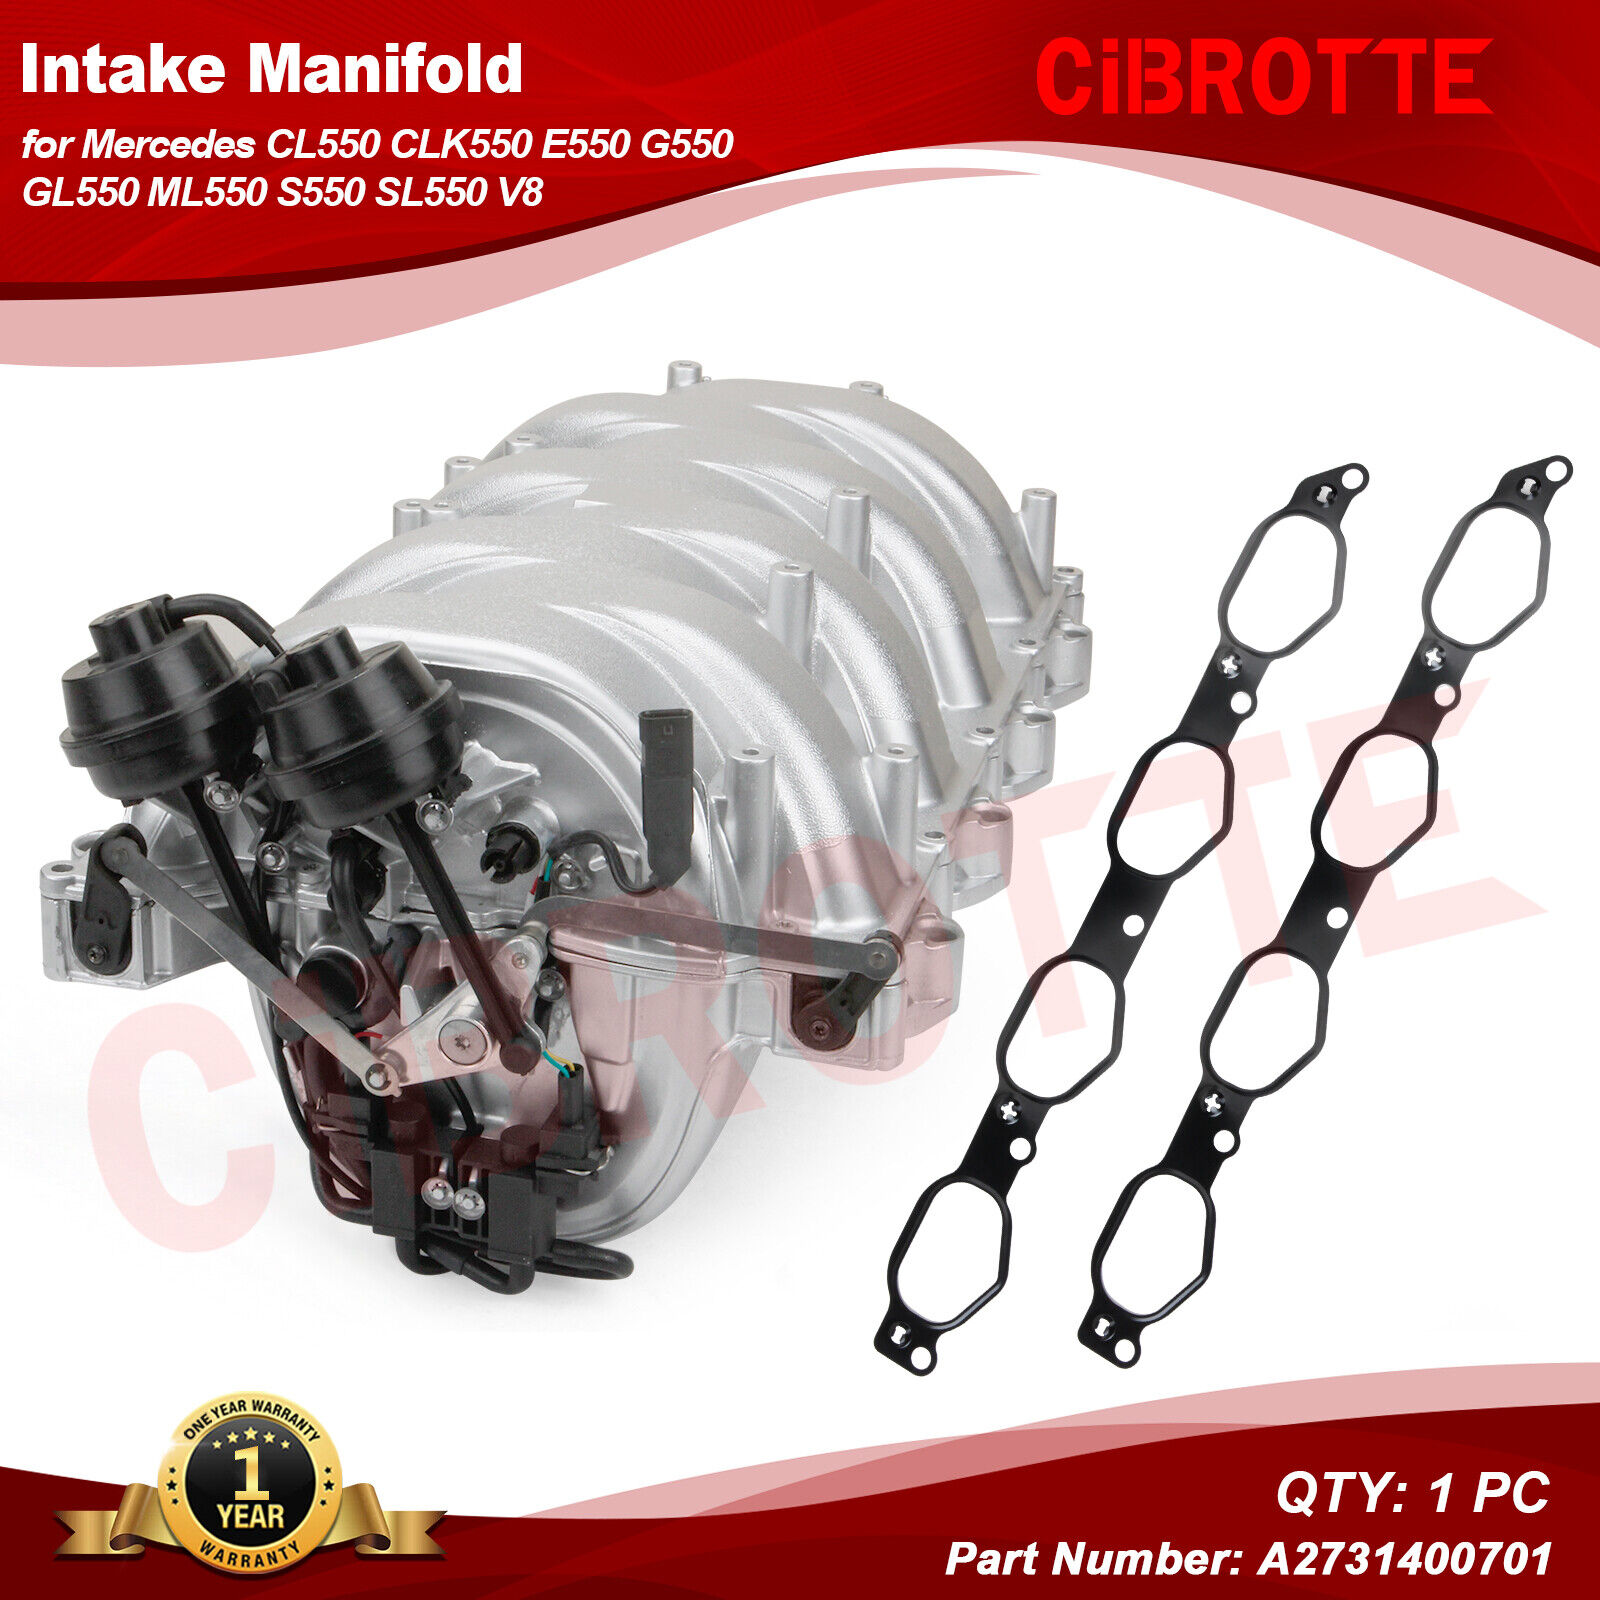 Intake Manifold for Mercedes CL550 CLK550 E550 G550 GL550 ML550 S550 SL550 V8🏅